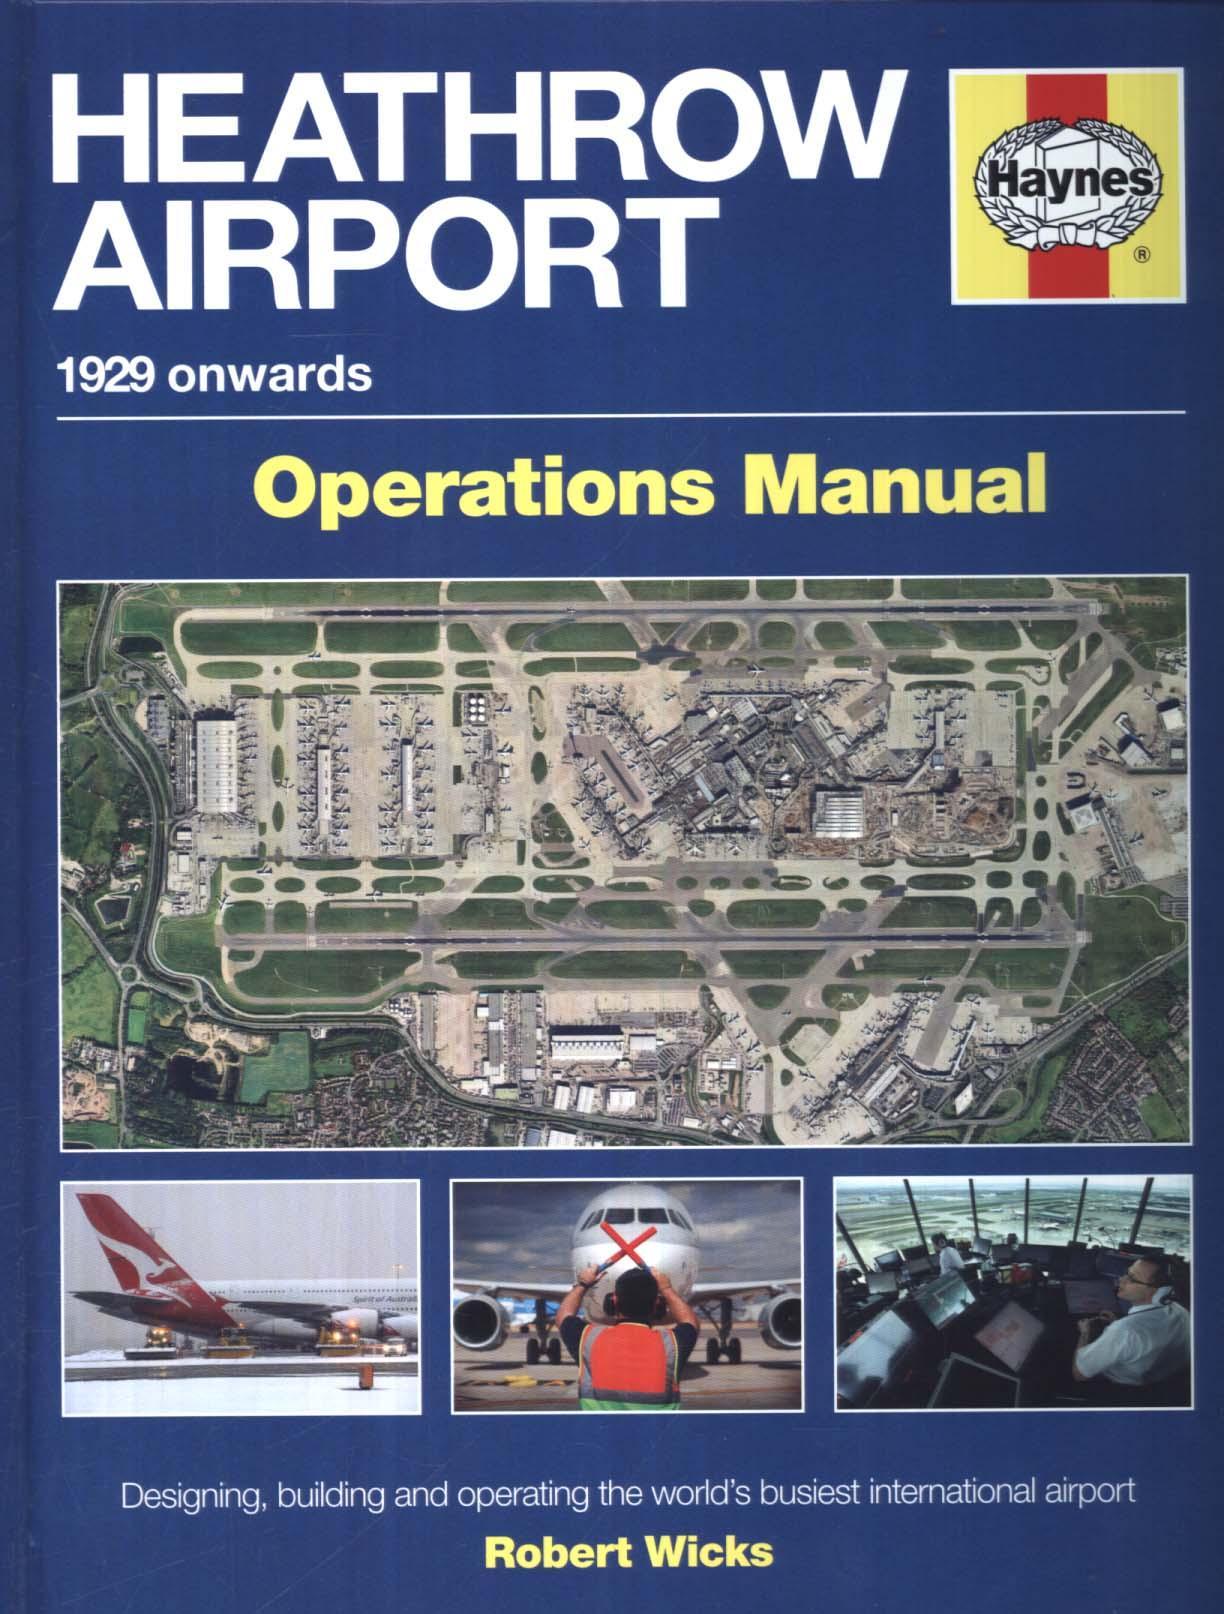 Heathrow Airport Manual